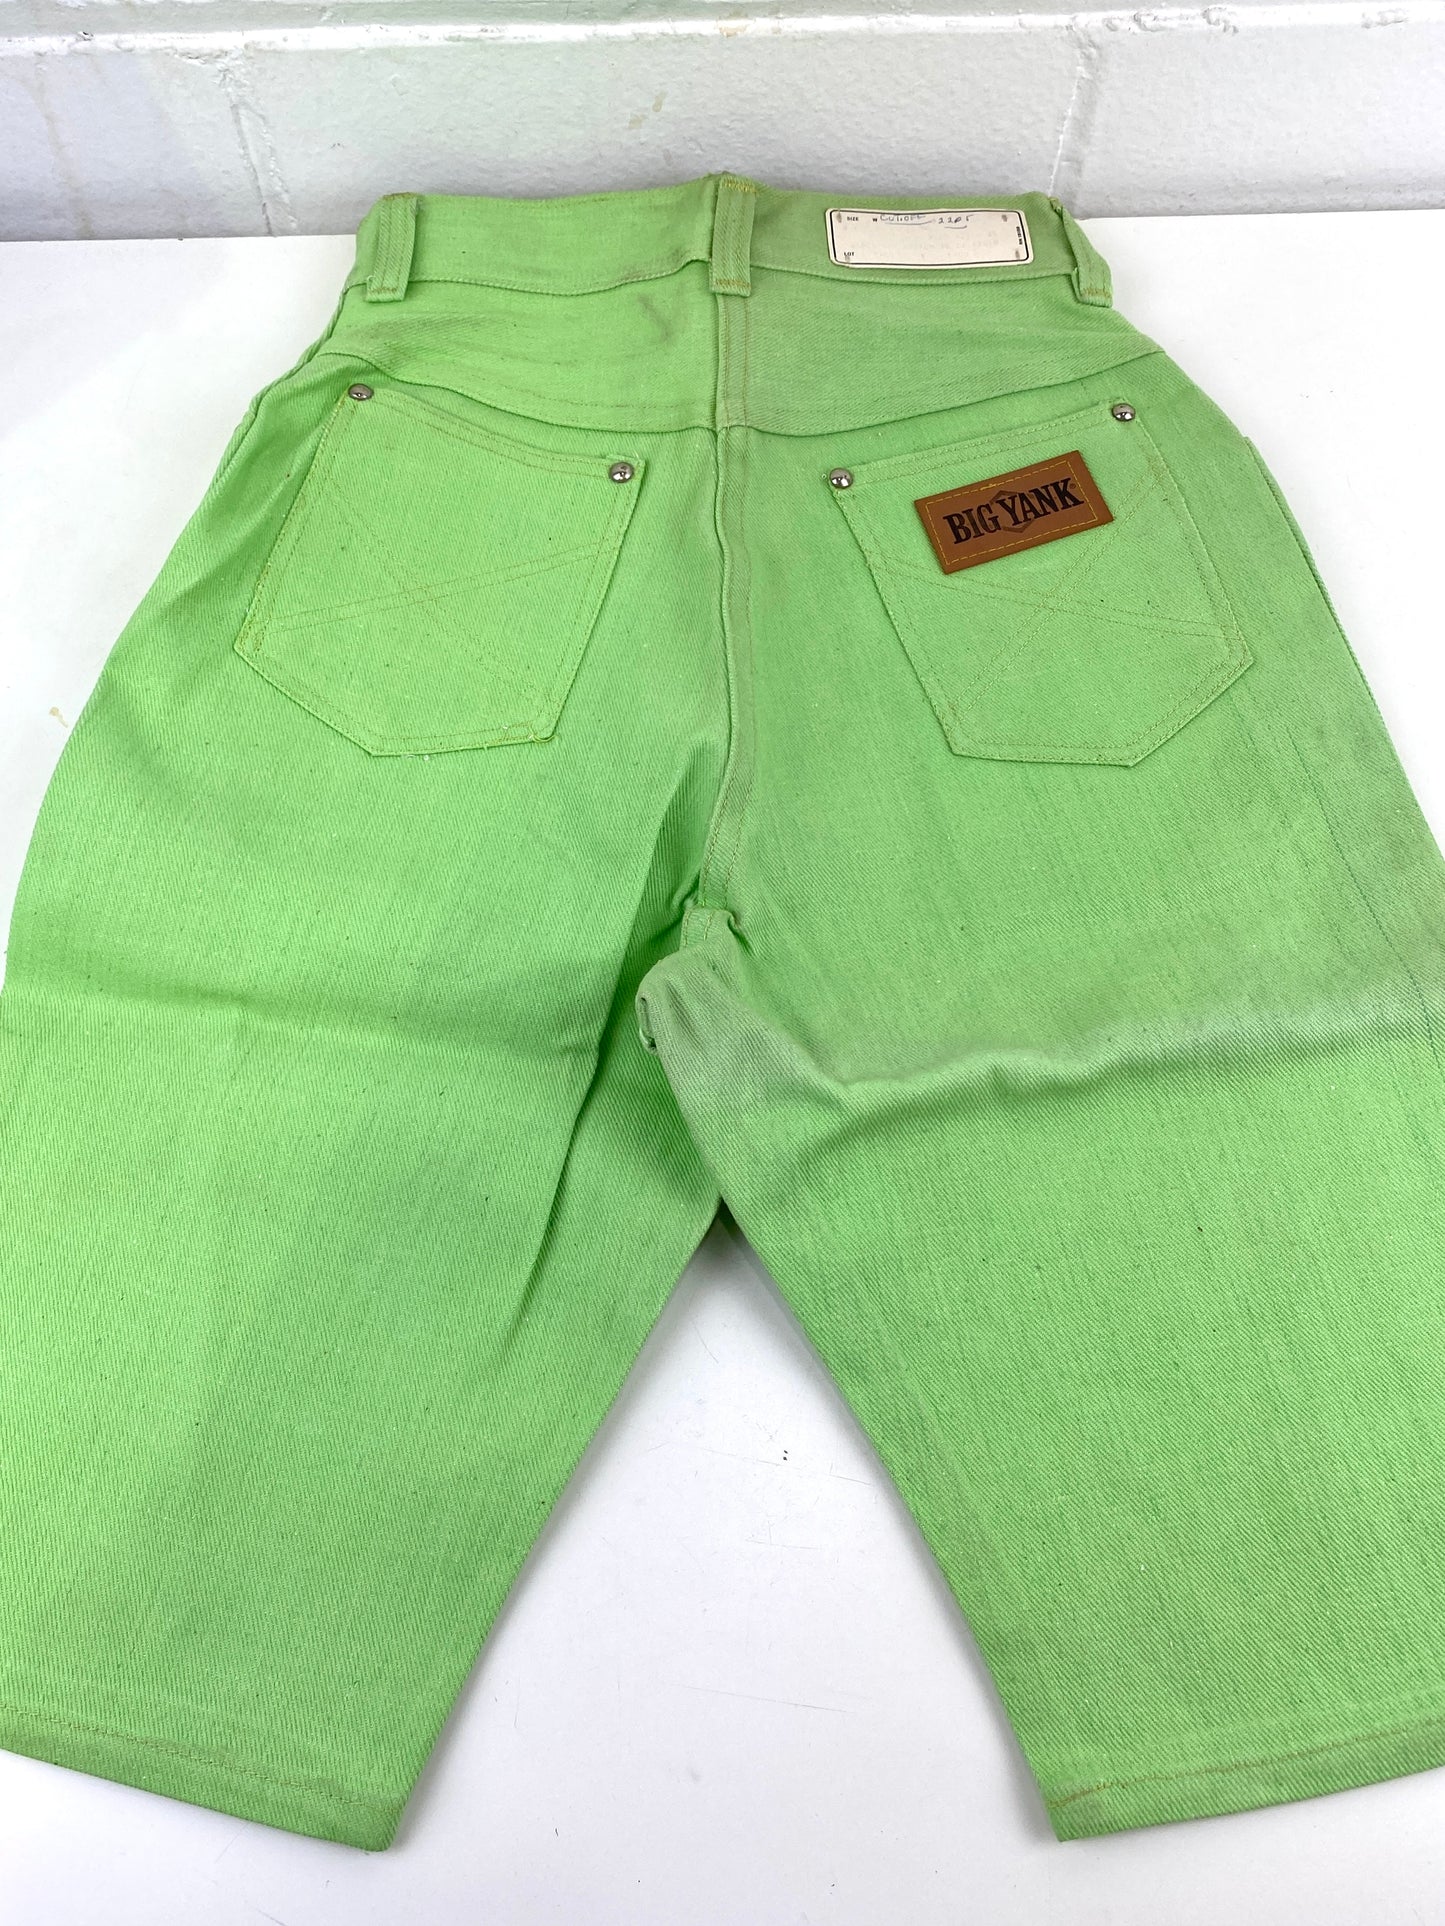 Vintage 1970s Deadstock Girls Jeans, Kids 'Big Yank' Cut-Off Jean Shorts, Green Denim, NOS